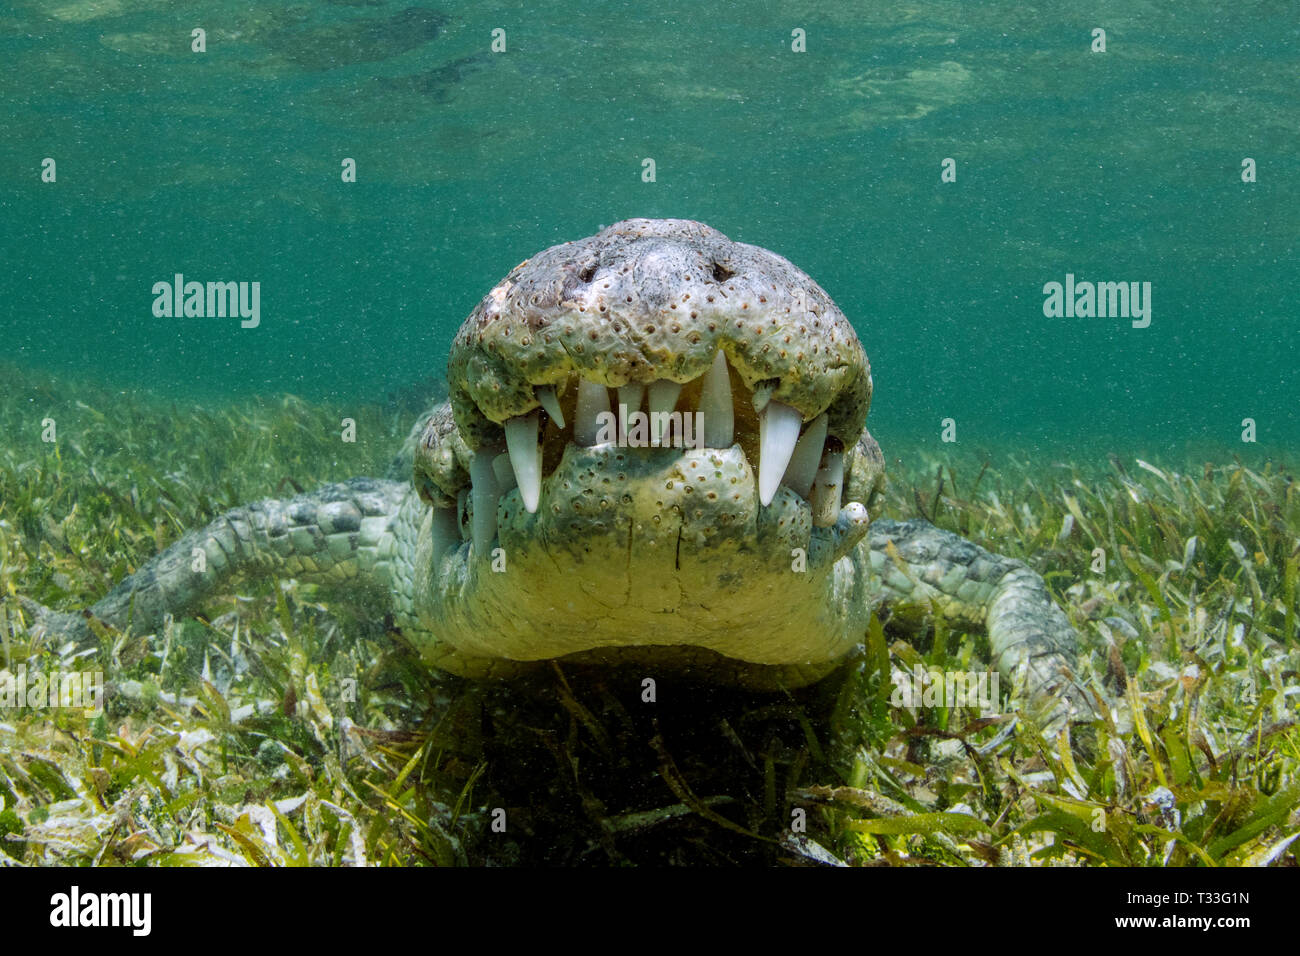 American Crocodile, Crocodylus acutus, Banco Chinchorro, Caribbean Sea, Mexico Stock Photo